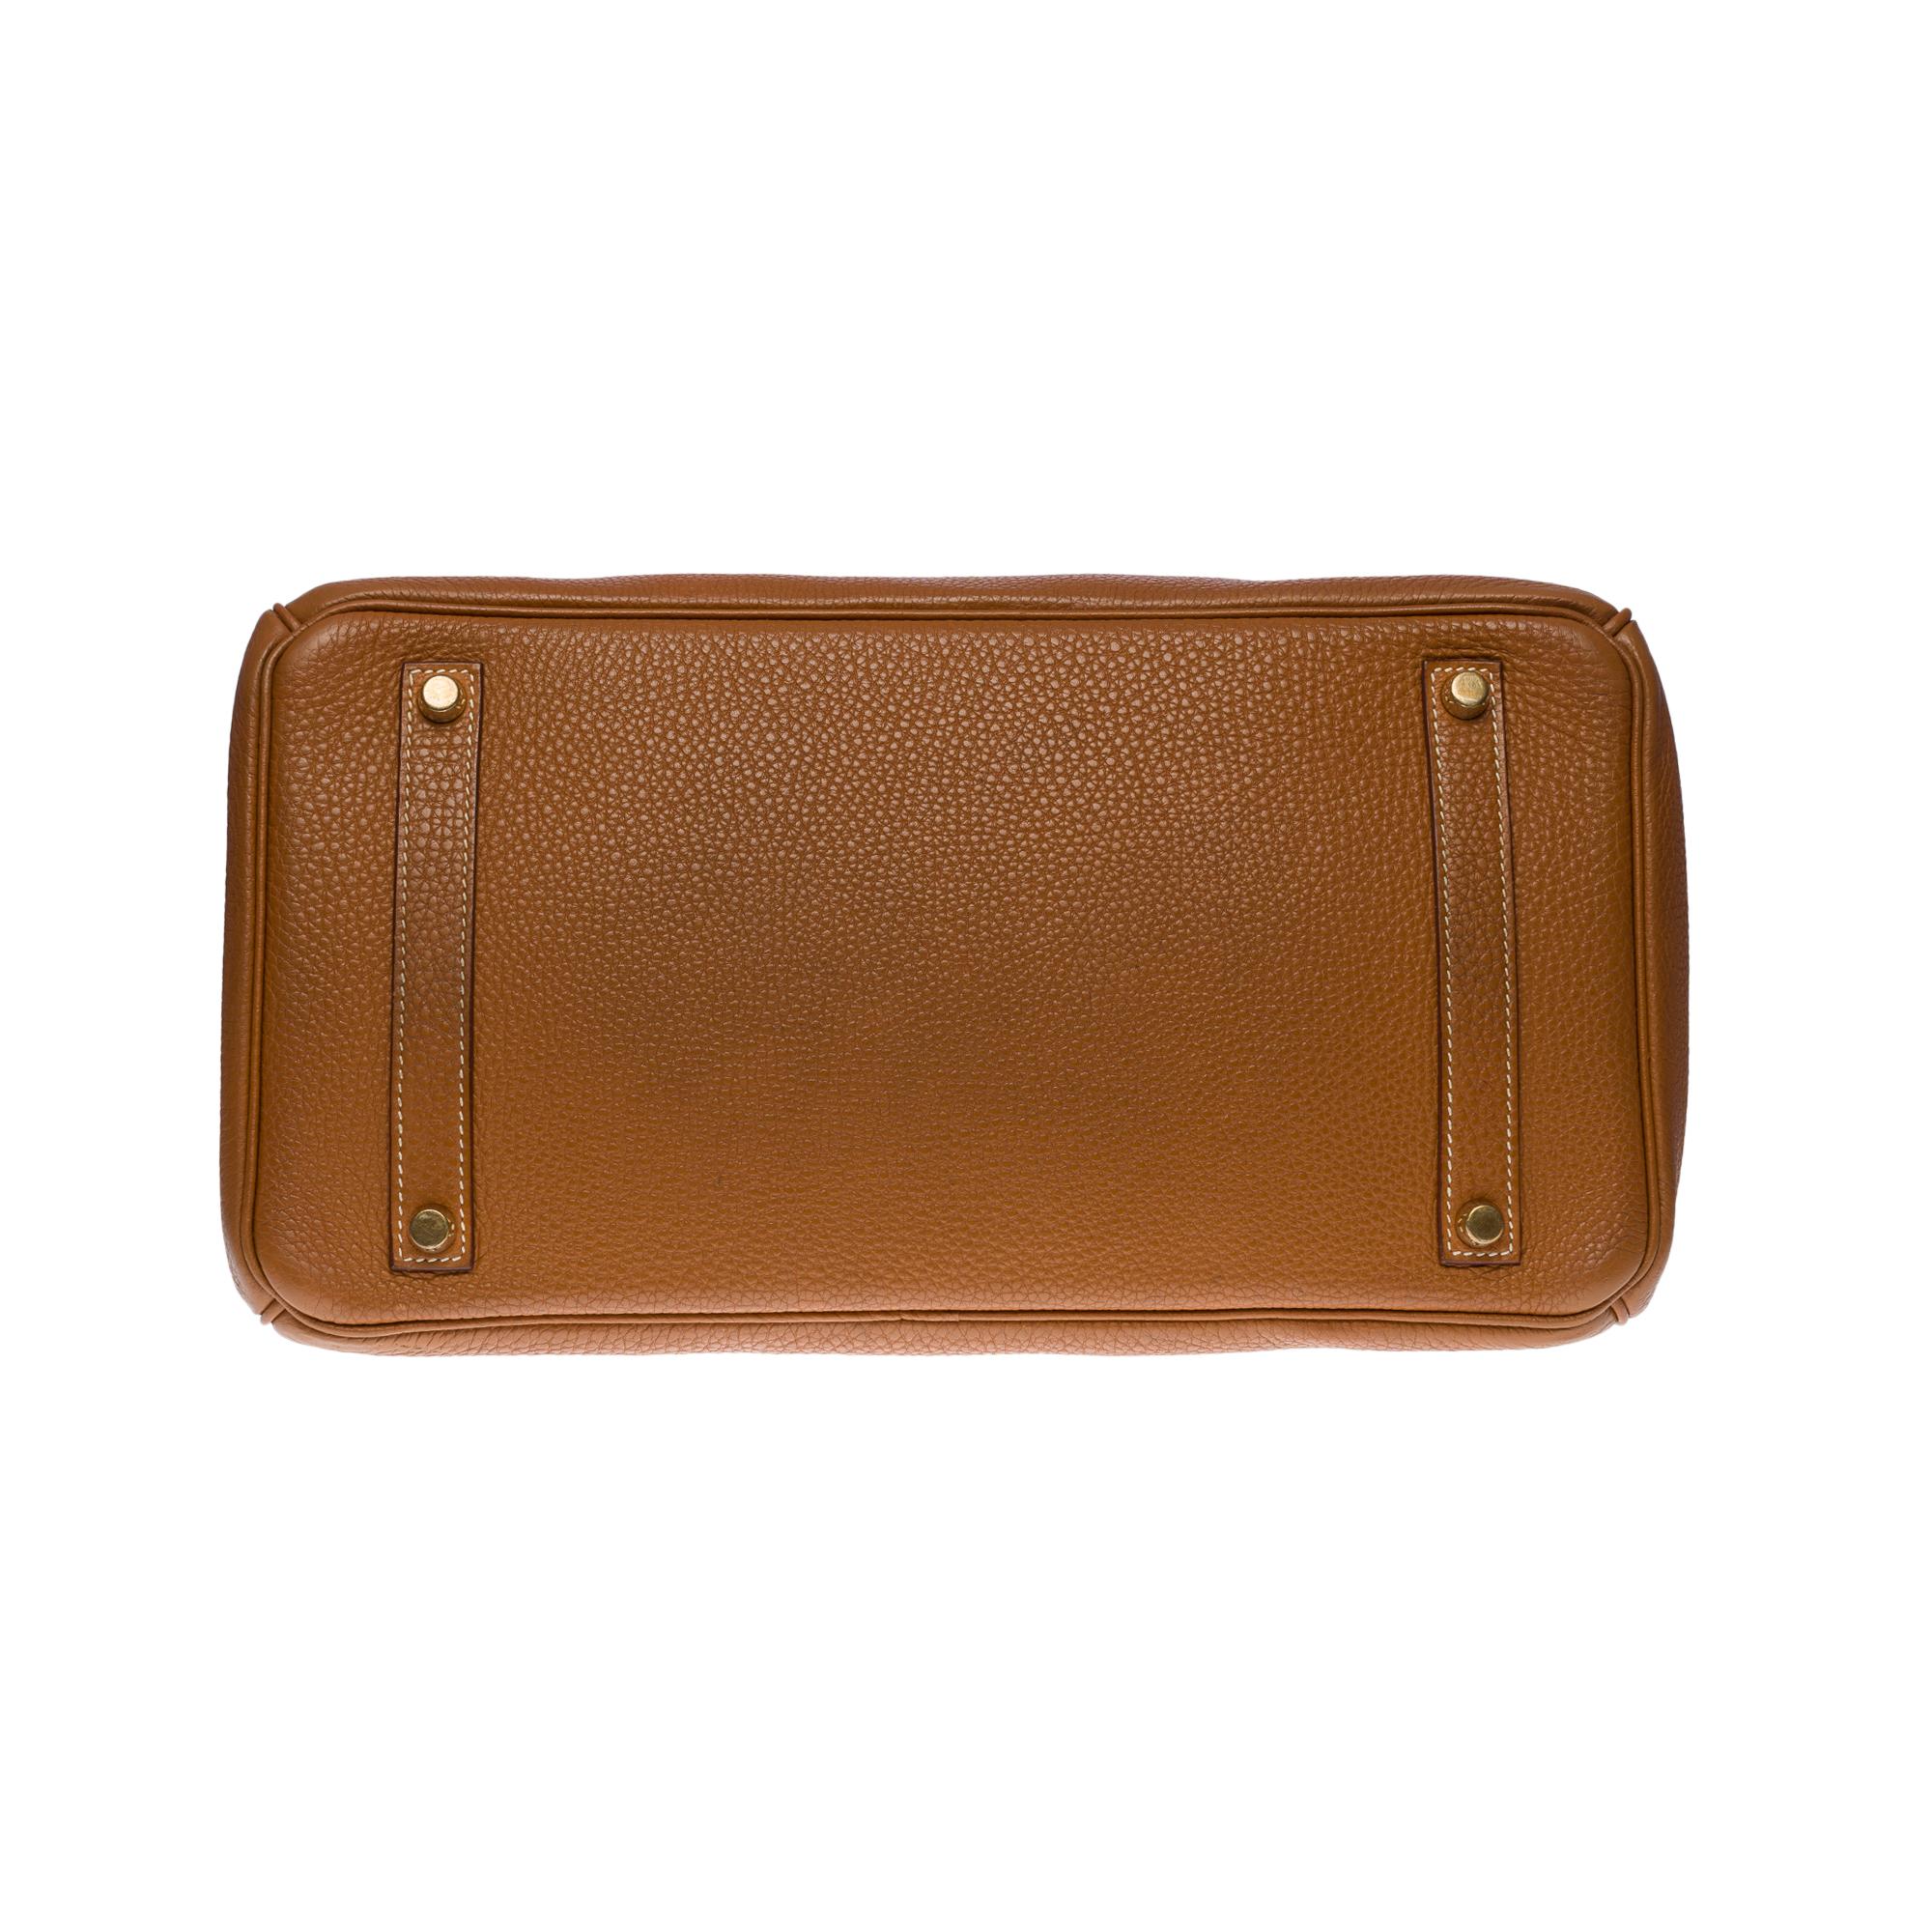 Amazing Hermès Birkin 35 handbag in Camel Togo leather, GHW 3